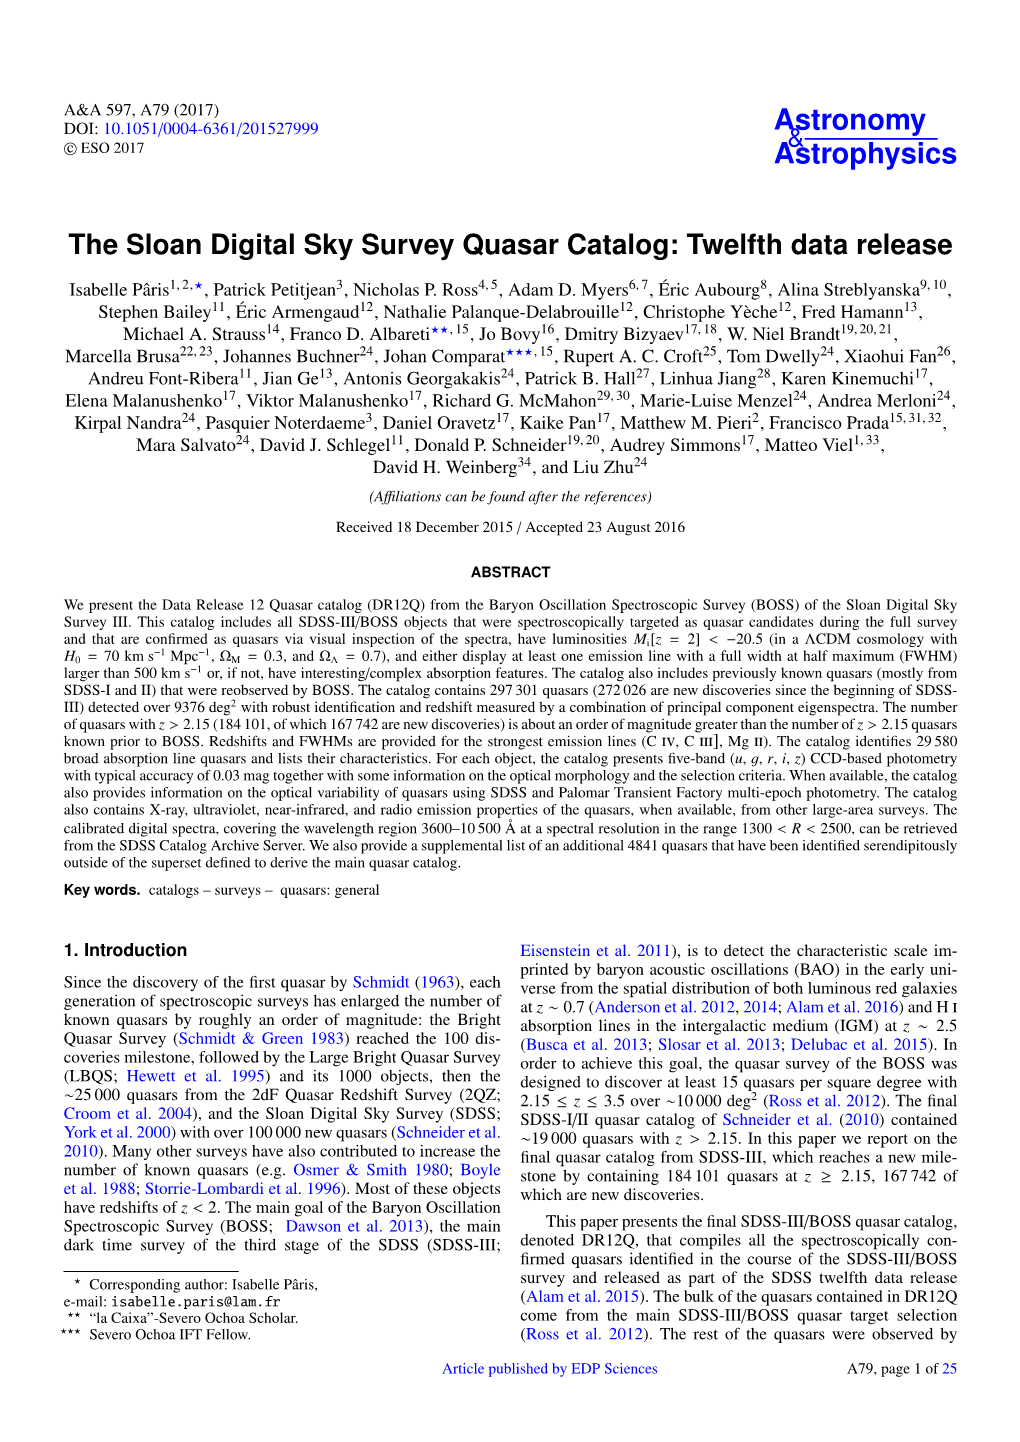 The Sloan Digital Sky Survey Quasar Catalog: Twelfth Data Release